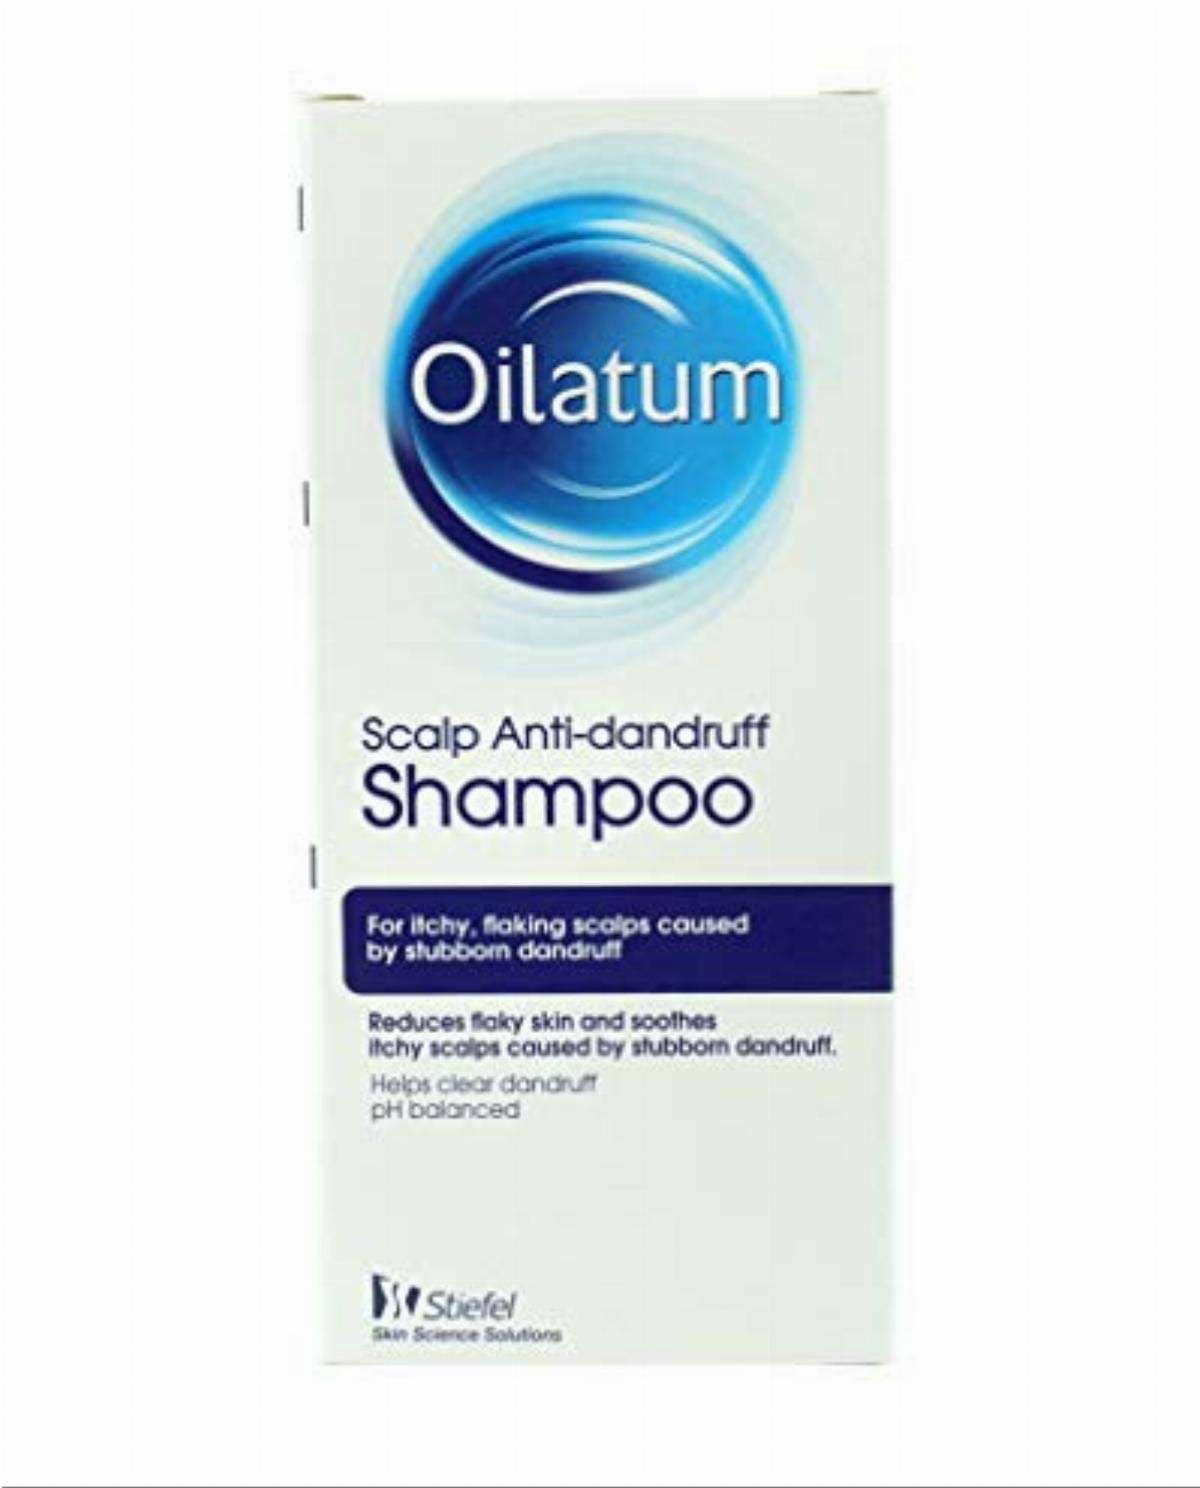 Stiefel Oilatum Scalp Anti Dandruff Shampoo - 100ml